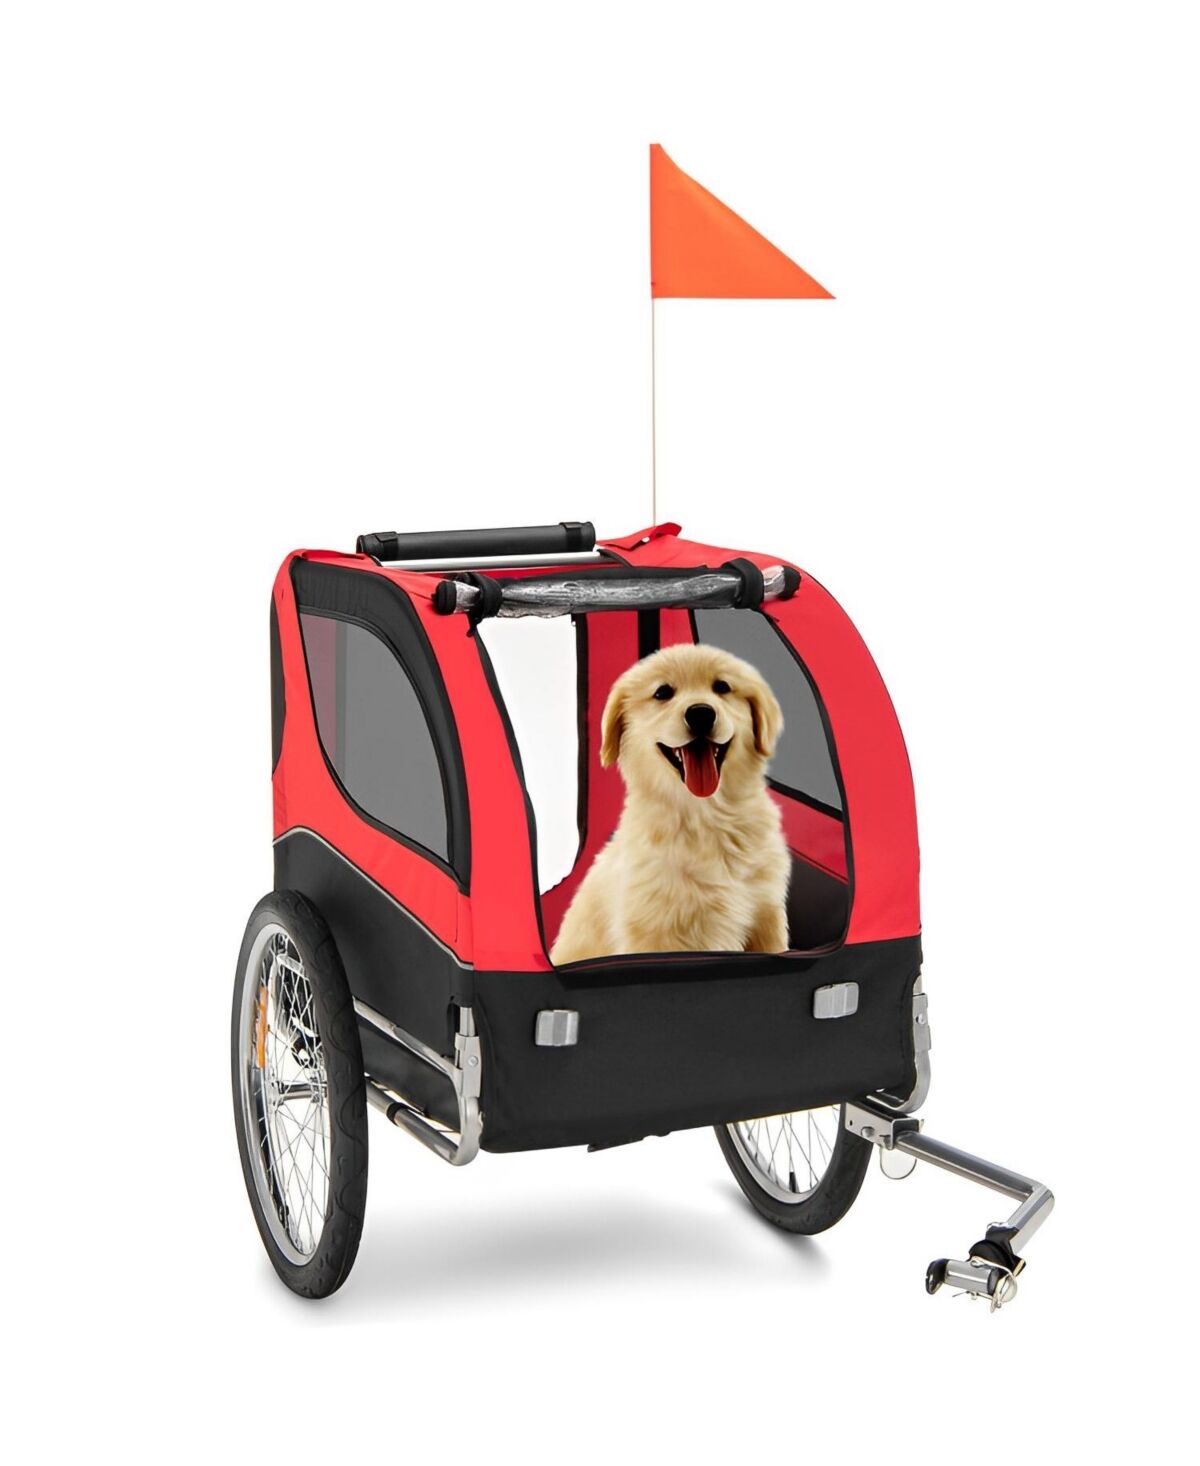 Sugift Dog Bike Trailer Foldable Pet Cart with 3 Entrances for Travel - Red